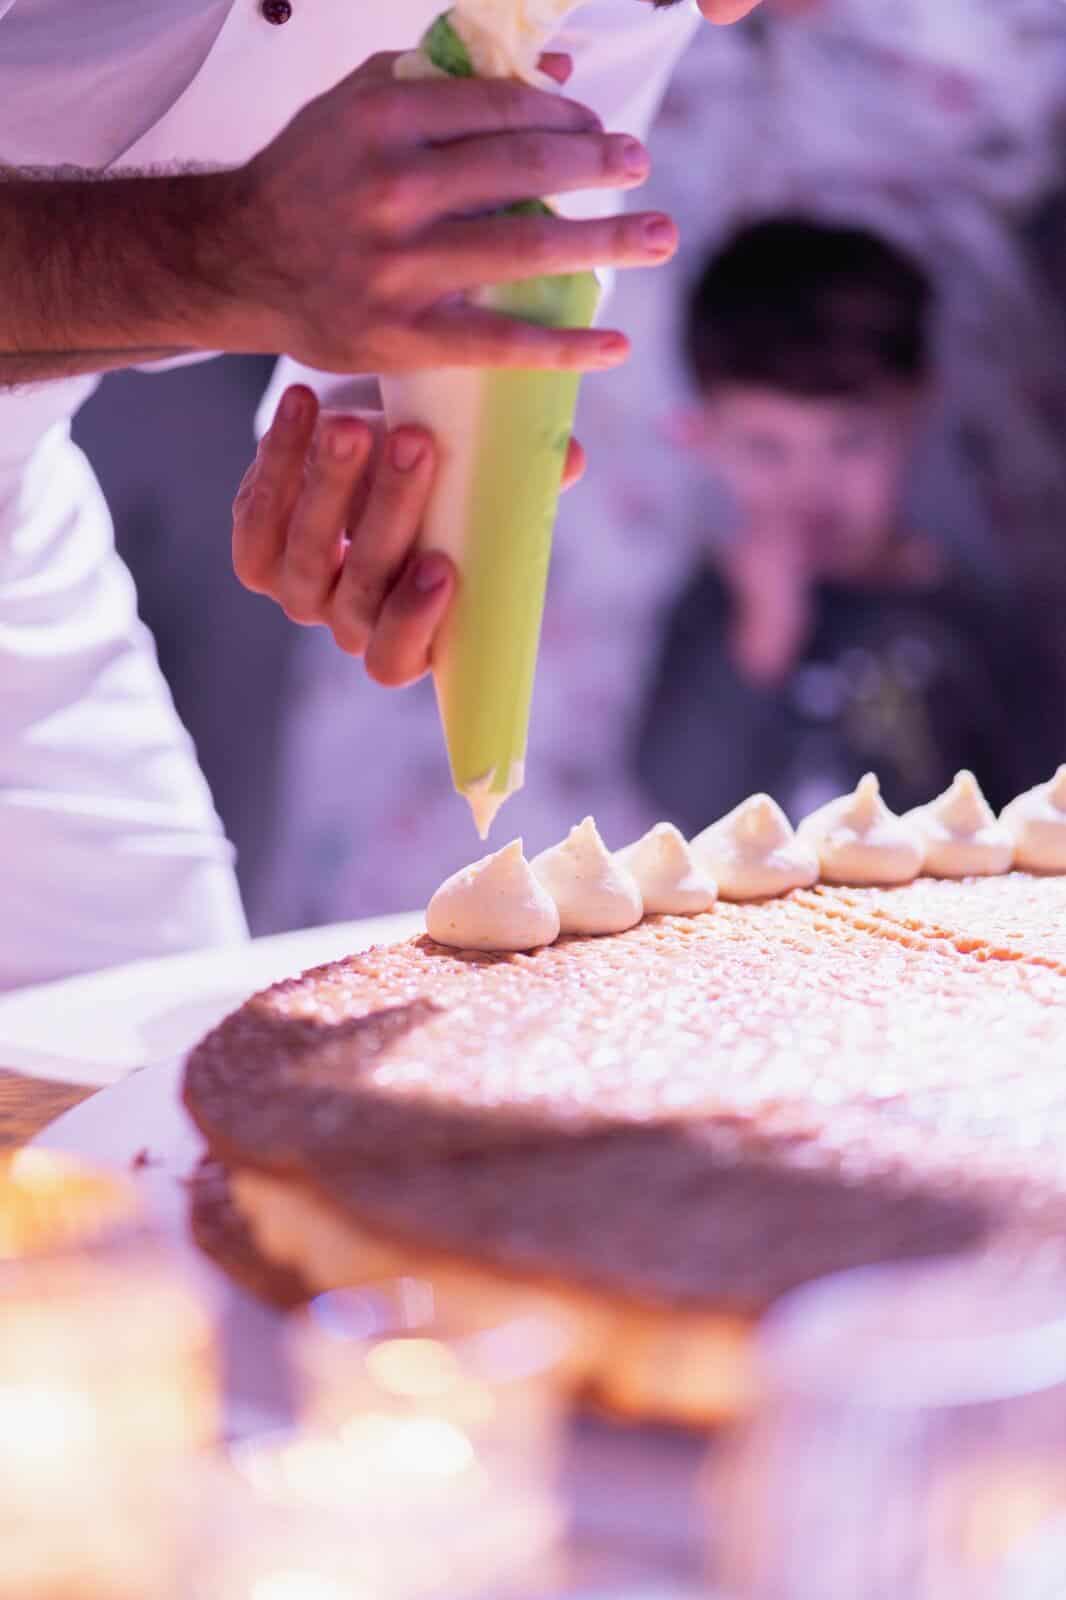 italian chef is decorating a wedding cake